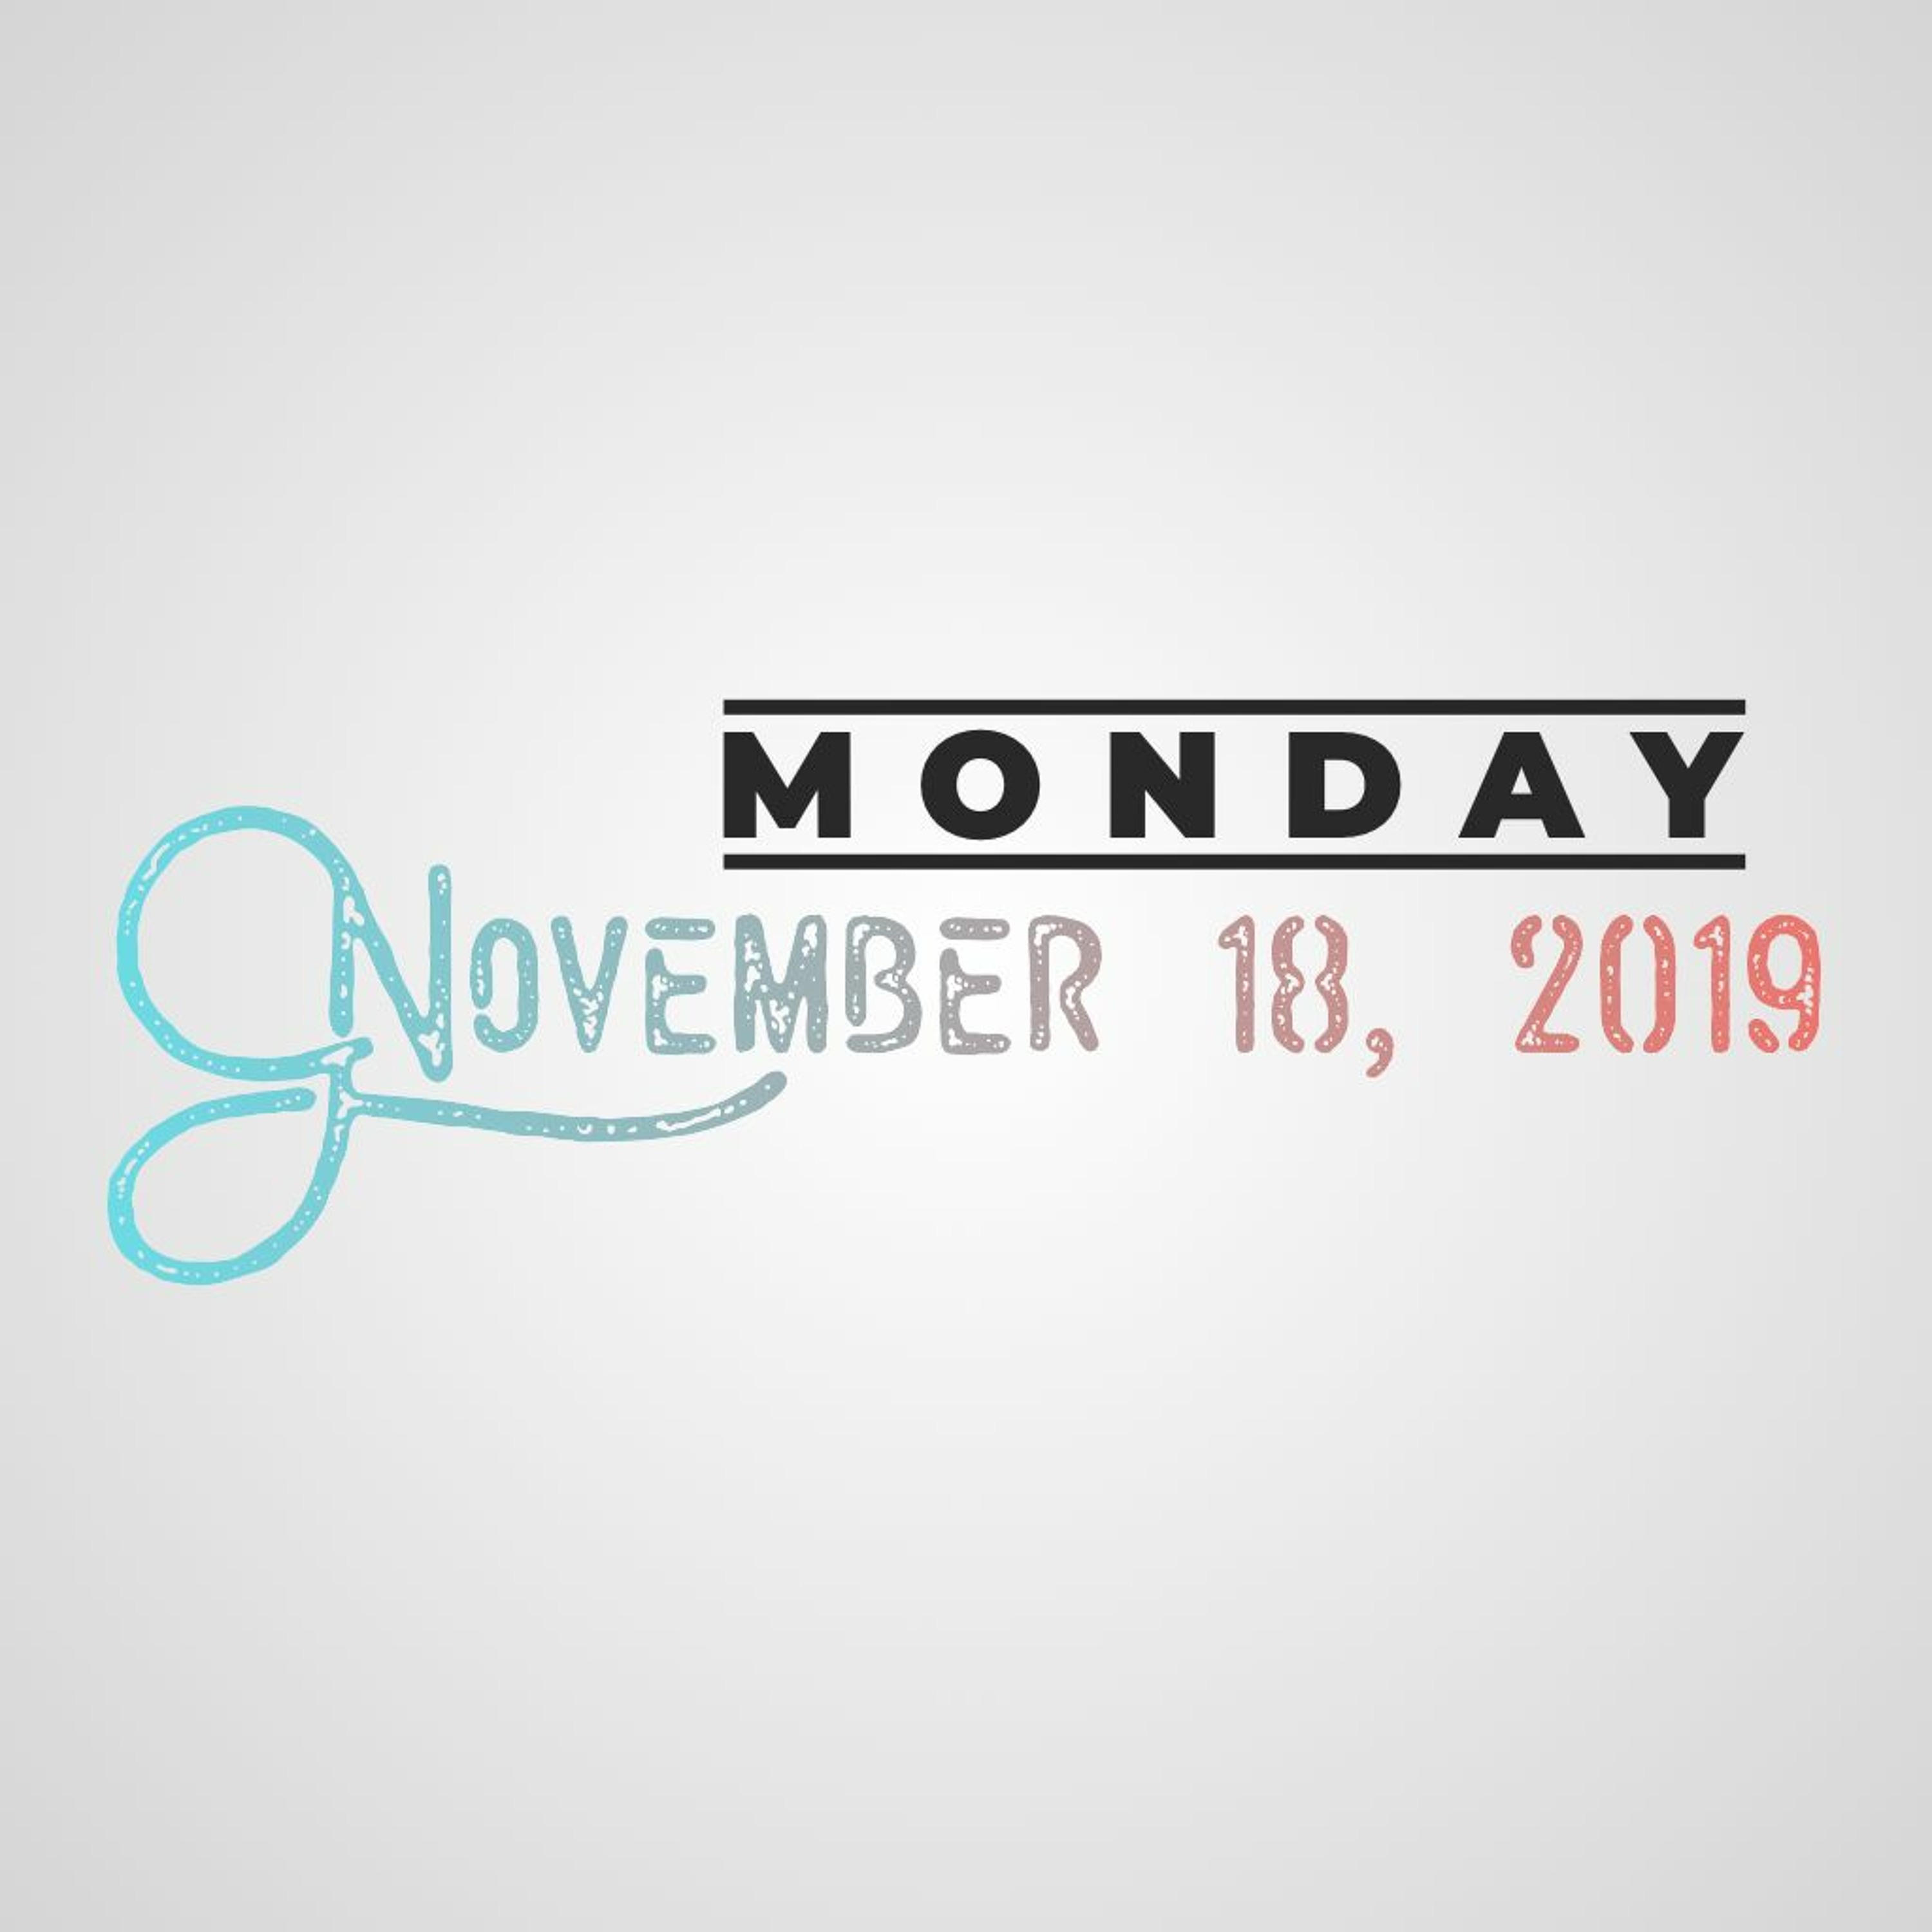 Monday, November 18, 2019